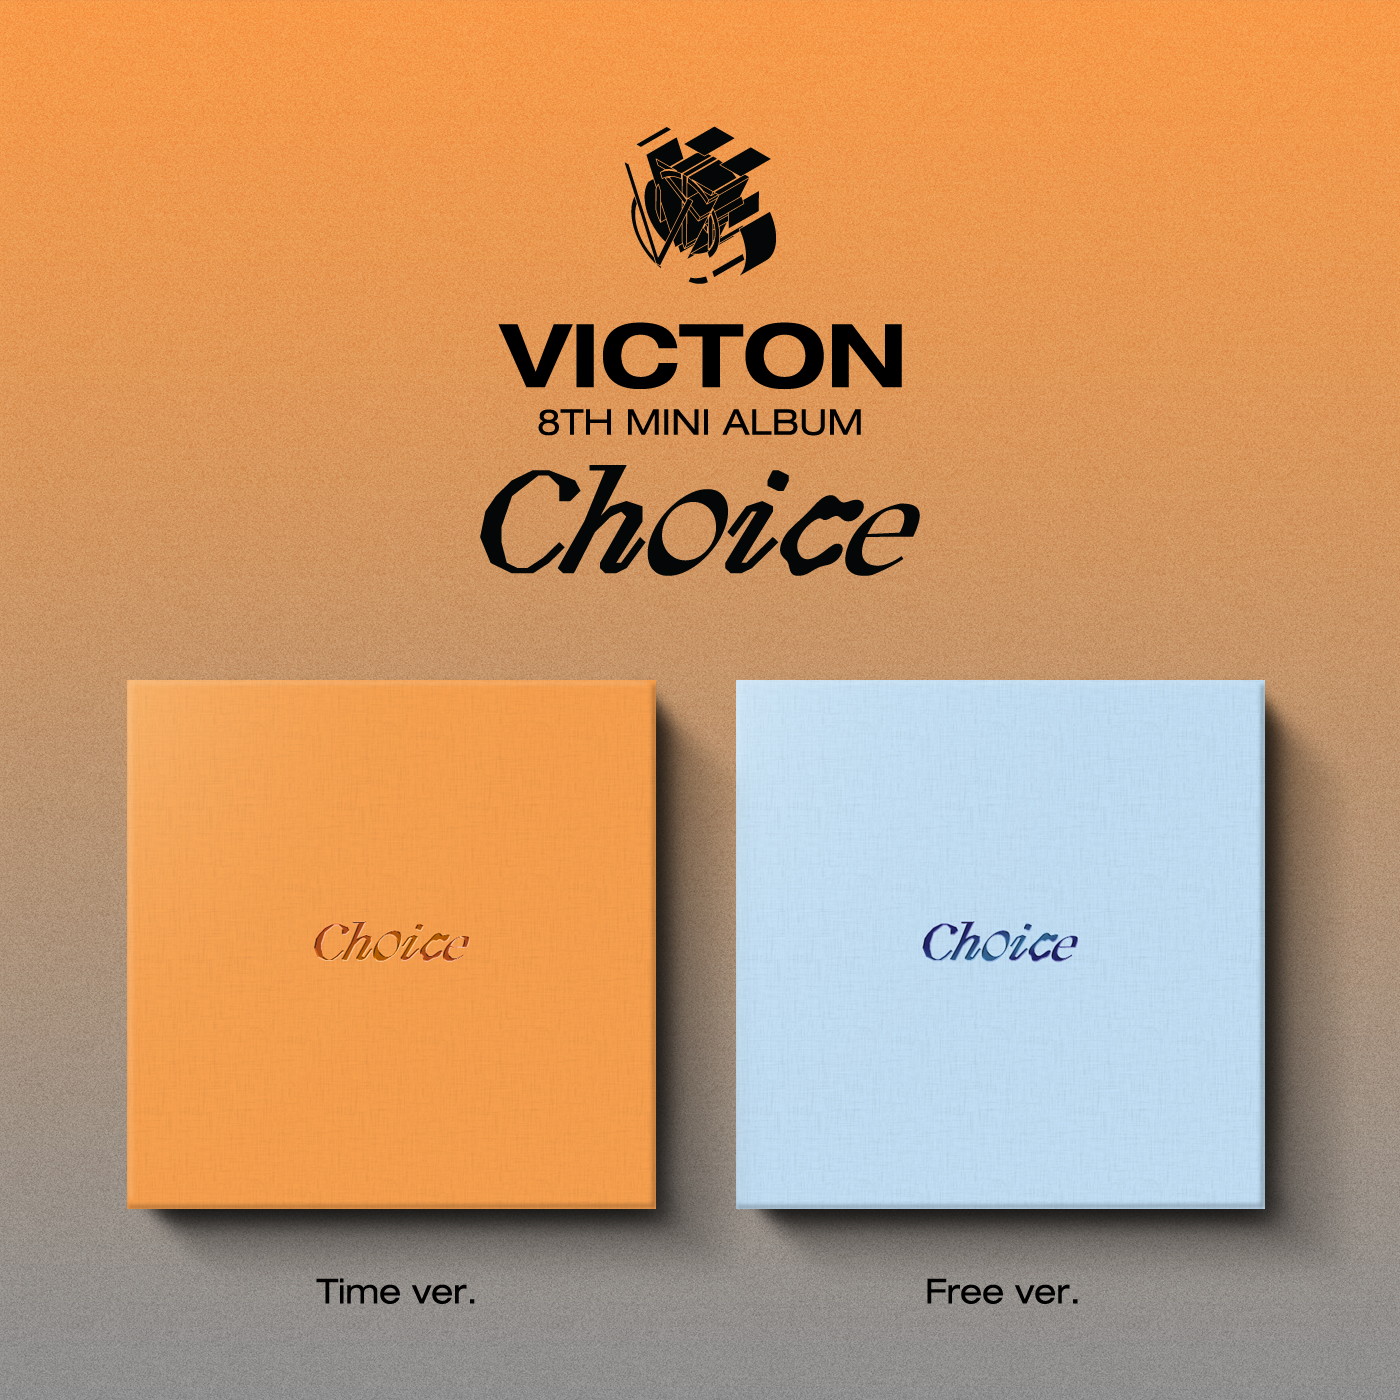 [2CD SET] VICTON - 8th Mini Album [Choice] (Time ver. + Free ver.) 